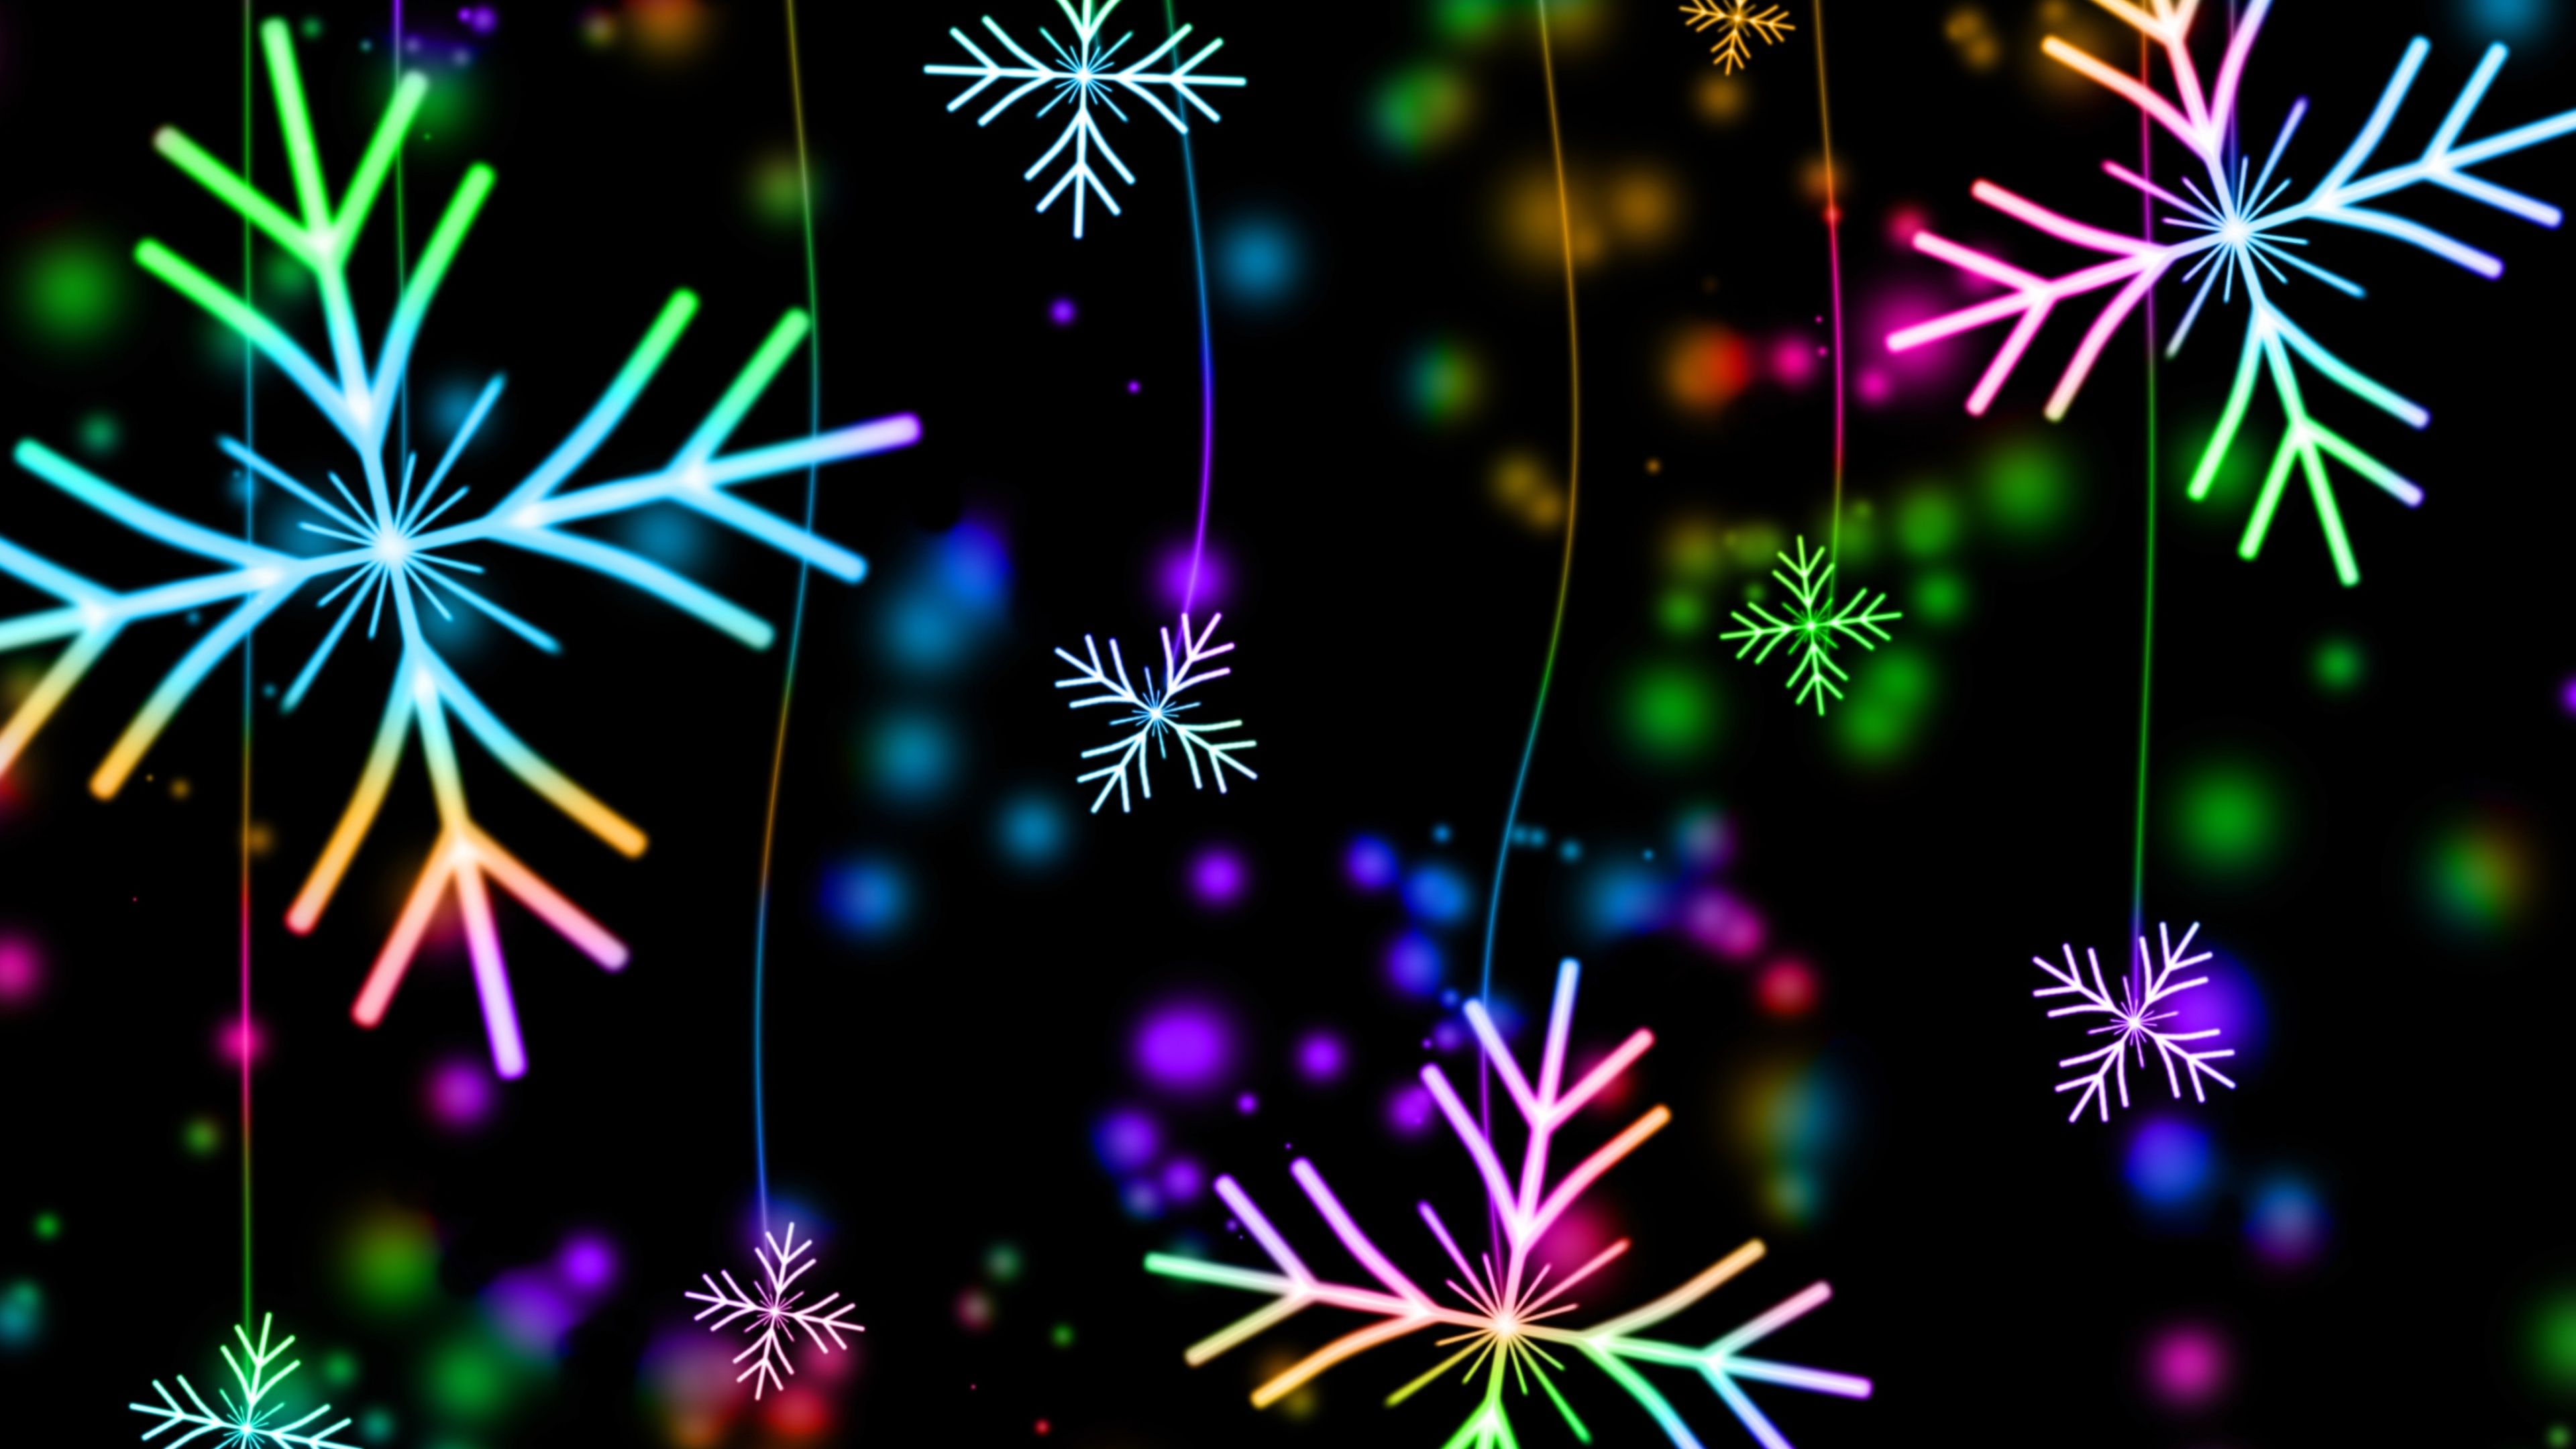 Snowflakes Wallpaper 4K, Winter, AMOLED, Celebrations Christmas